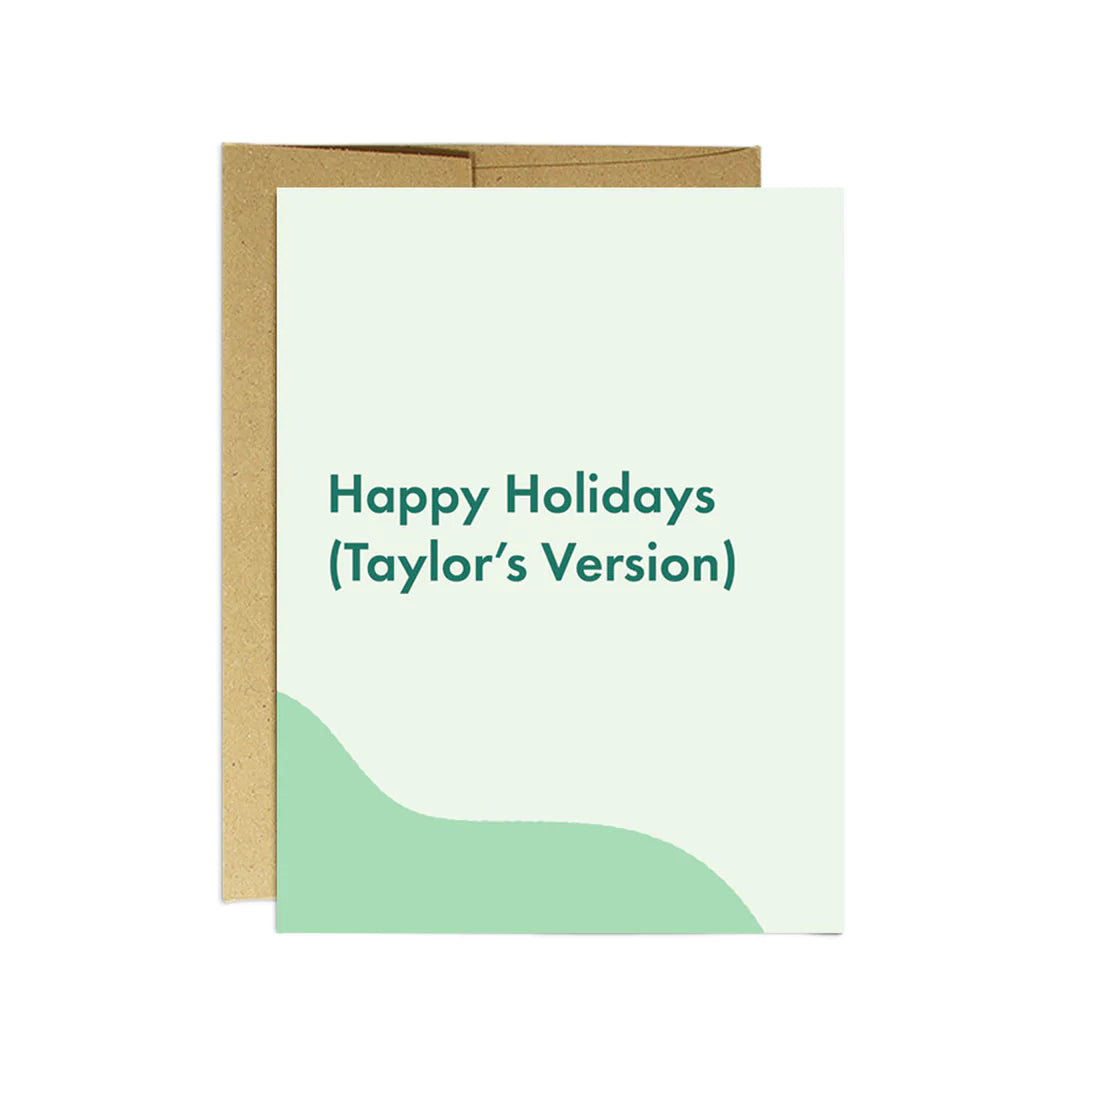 'Happy Holidays (Taylor's Version)' Card